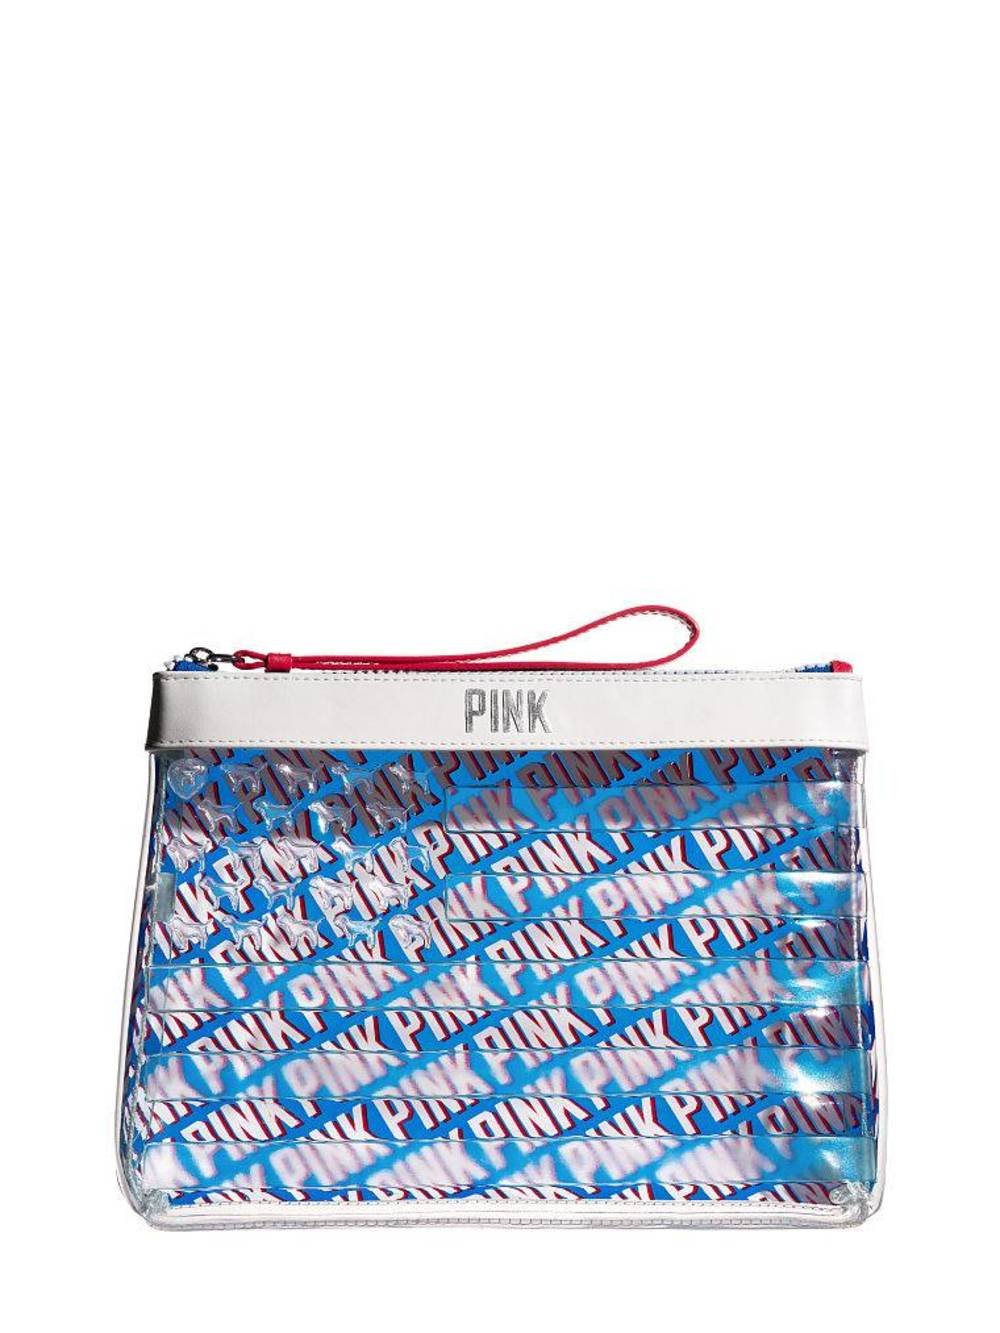 PINK Americana Bag